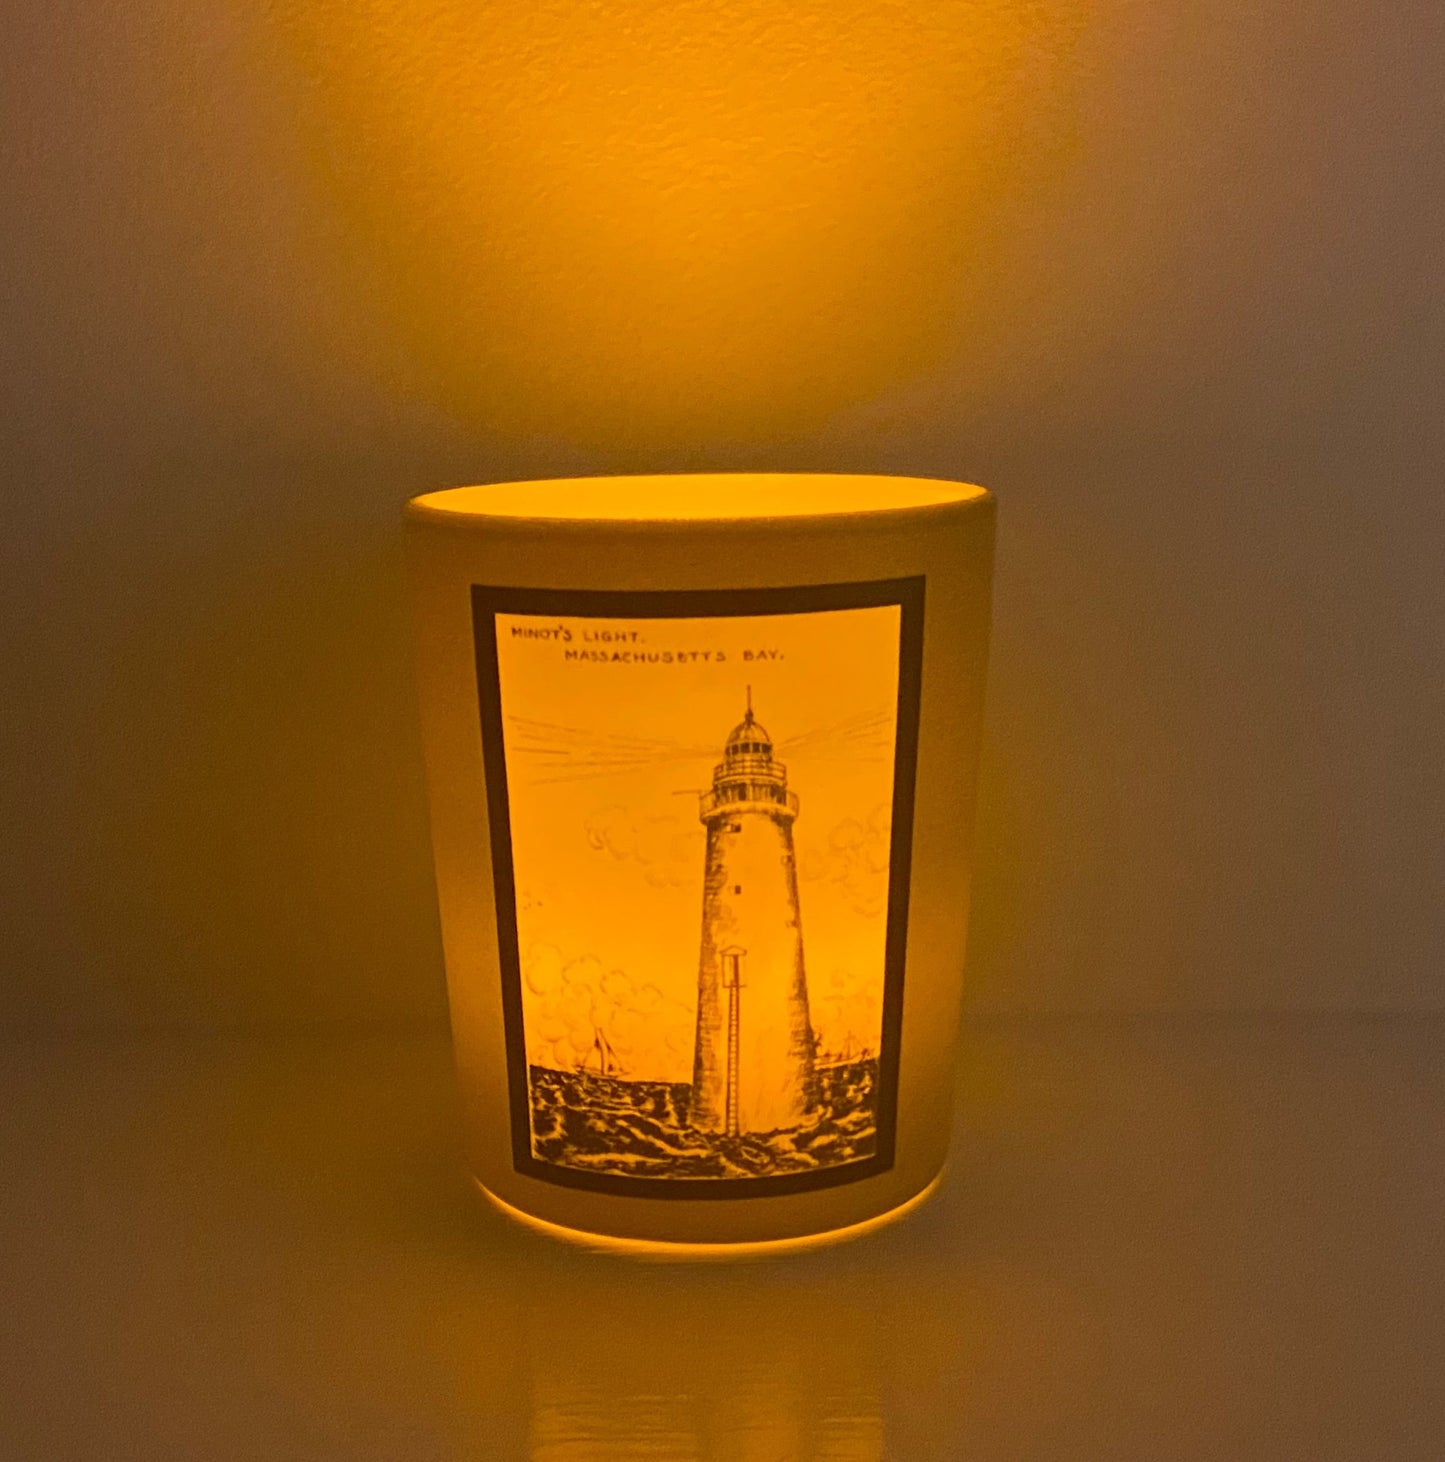 Arts & Crafts Minot Light Tea Light Votive Candle Holder - Set Of 3